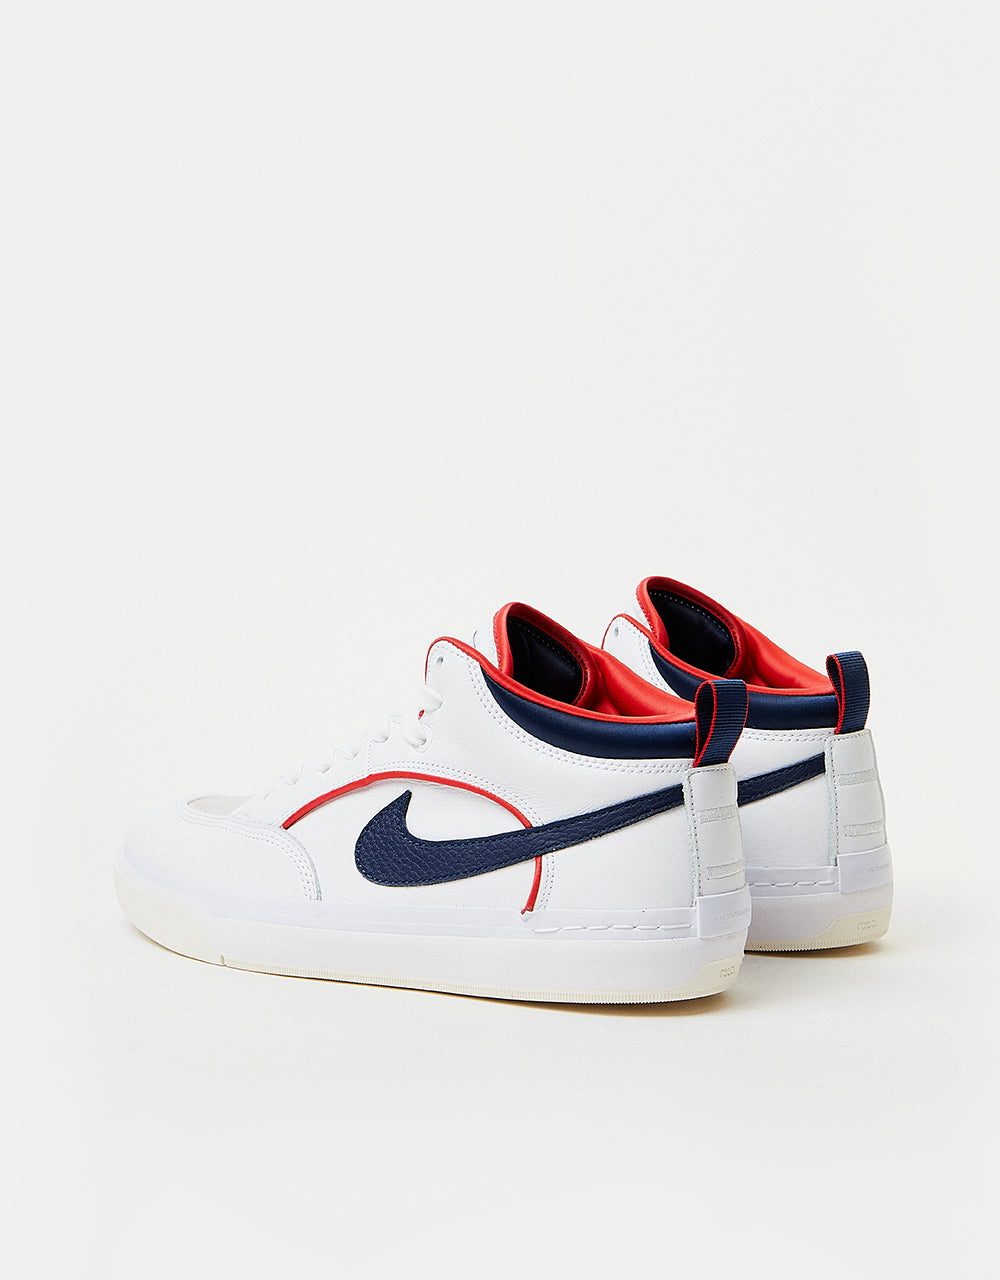 Nike SB React Leo Premium Skate Shoes - White/Midnight Navy